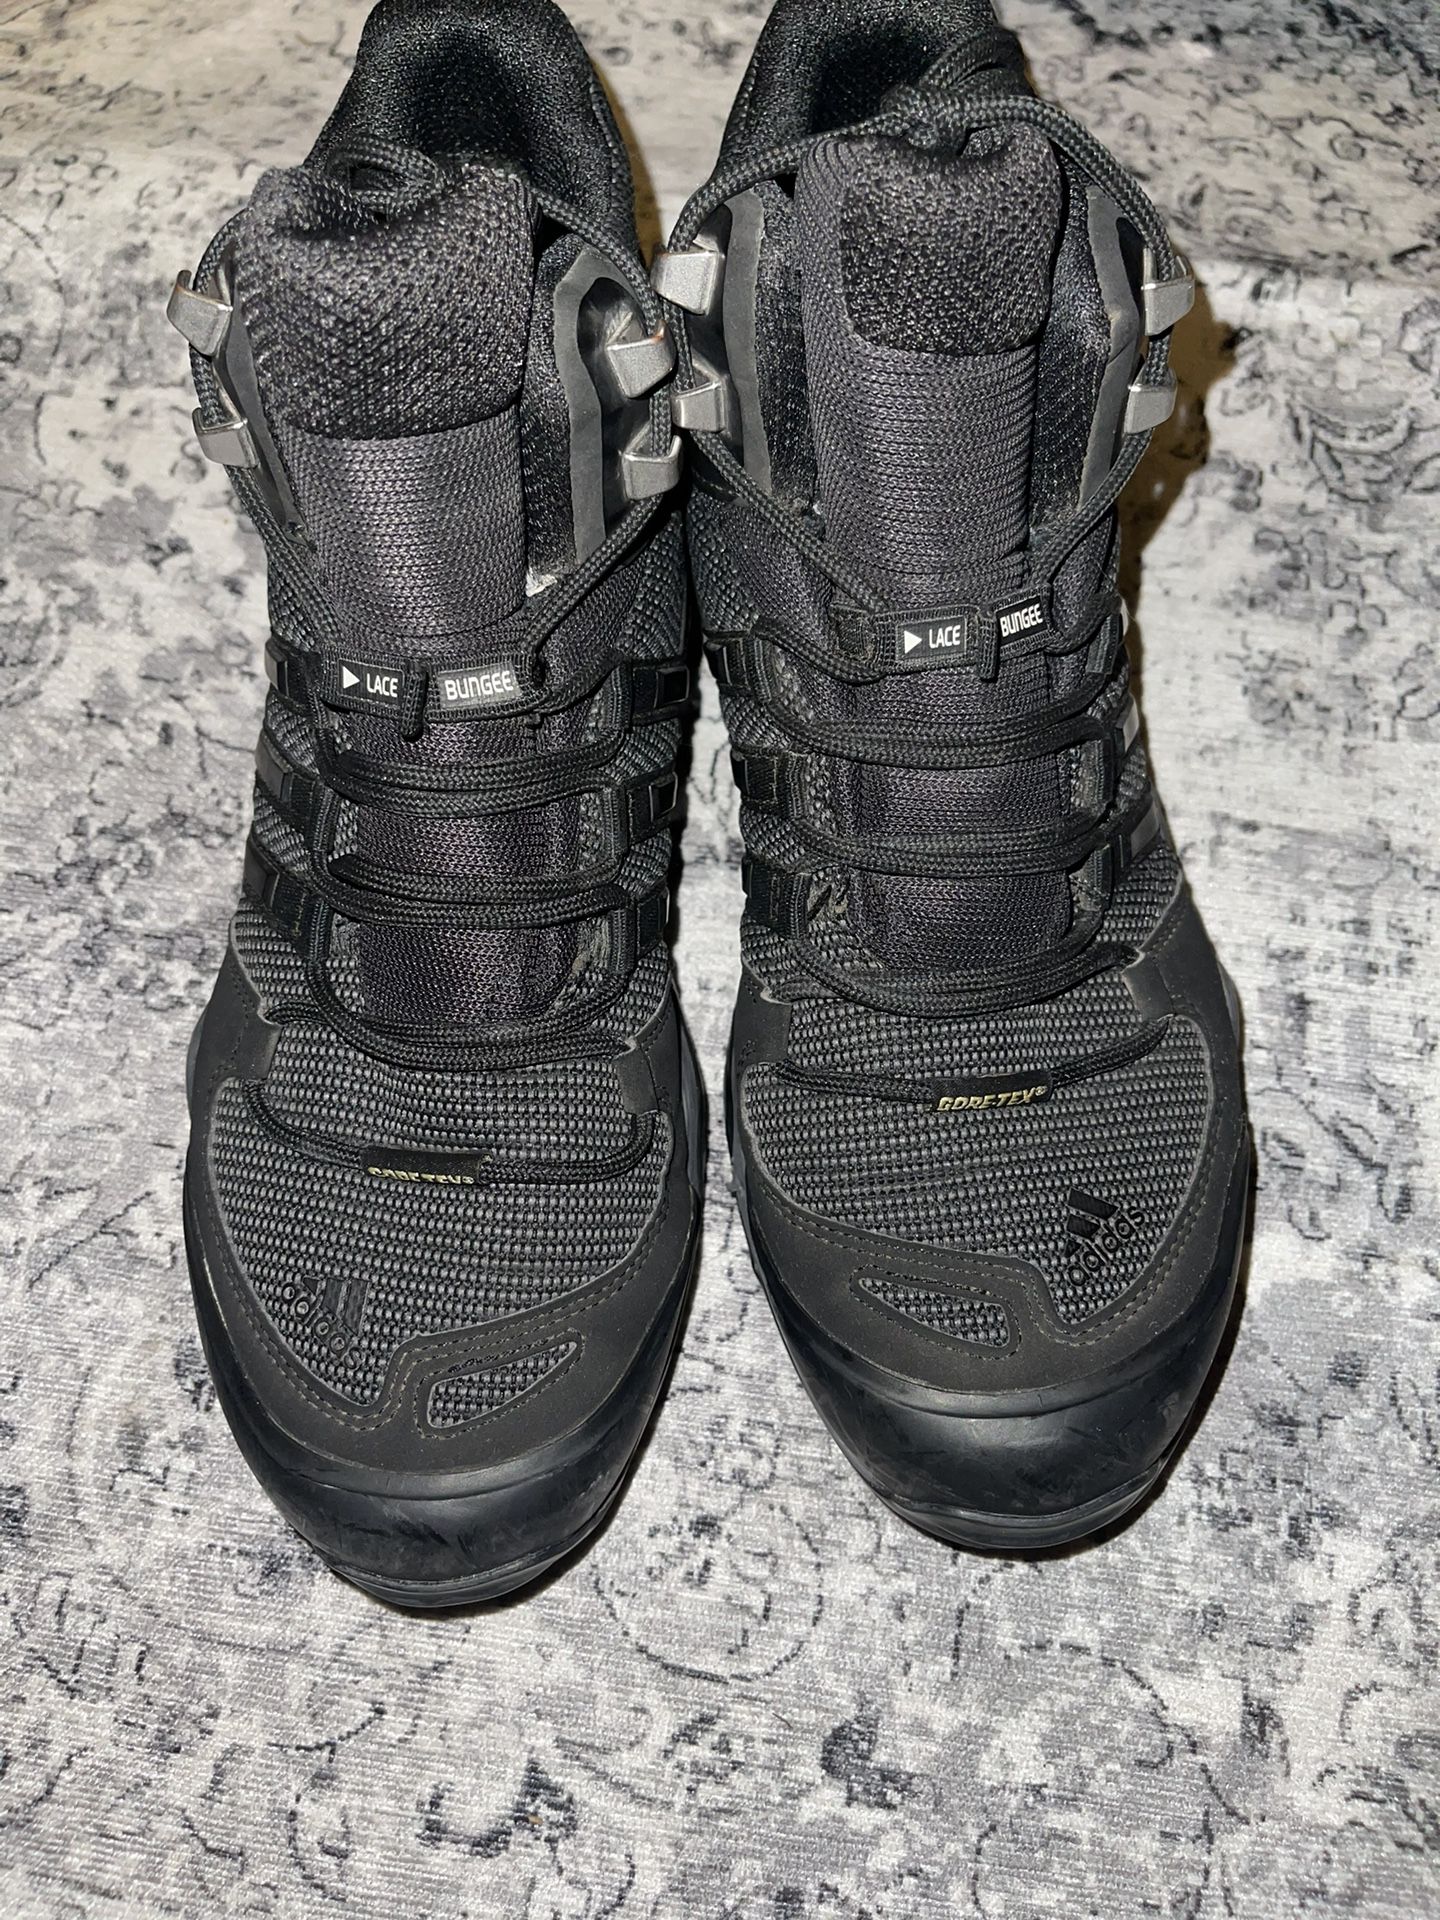 adidas Men's Terrex Gore-tex Hiking Boots